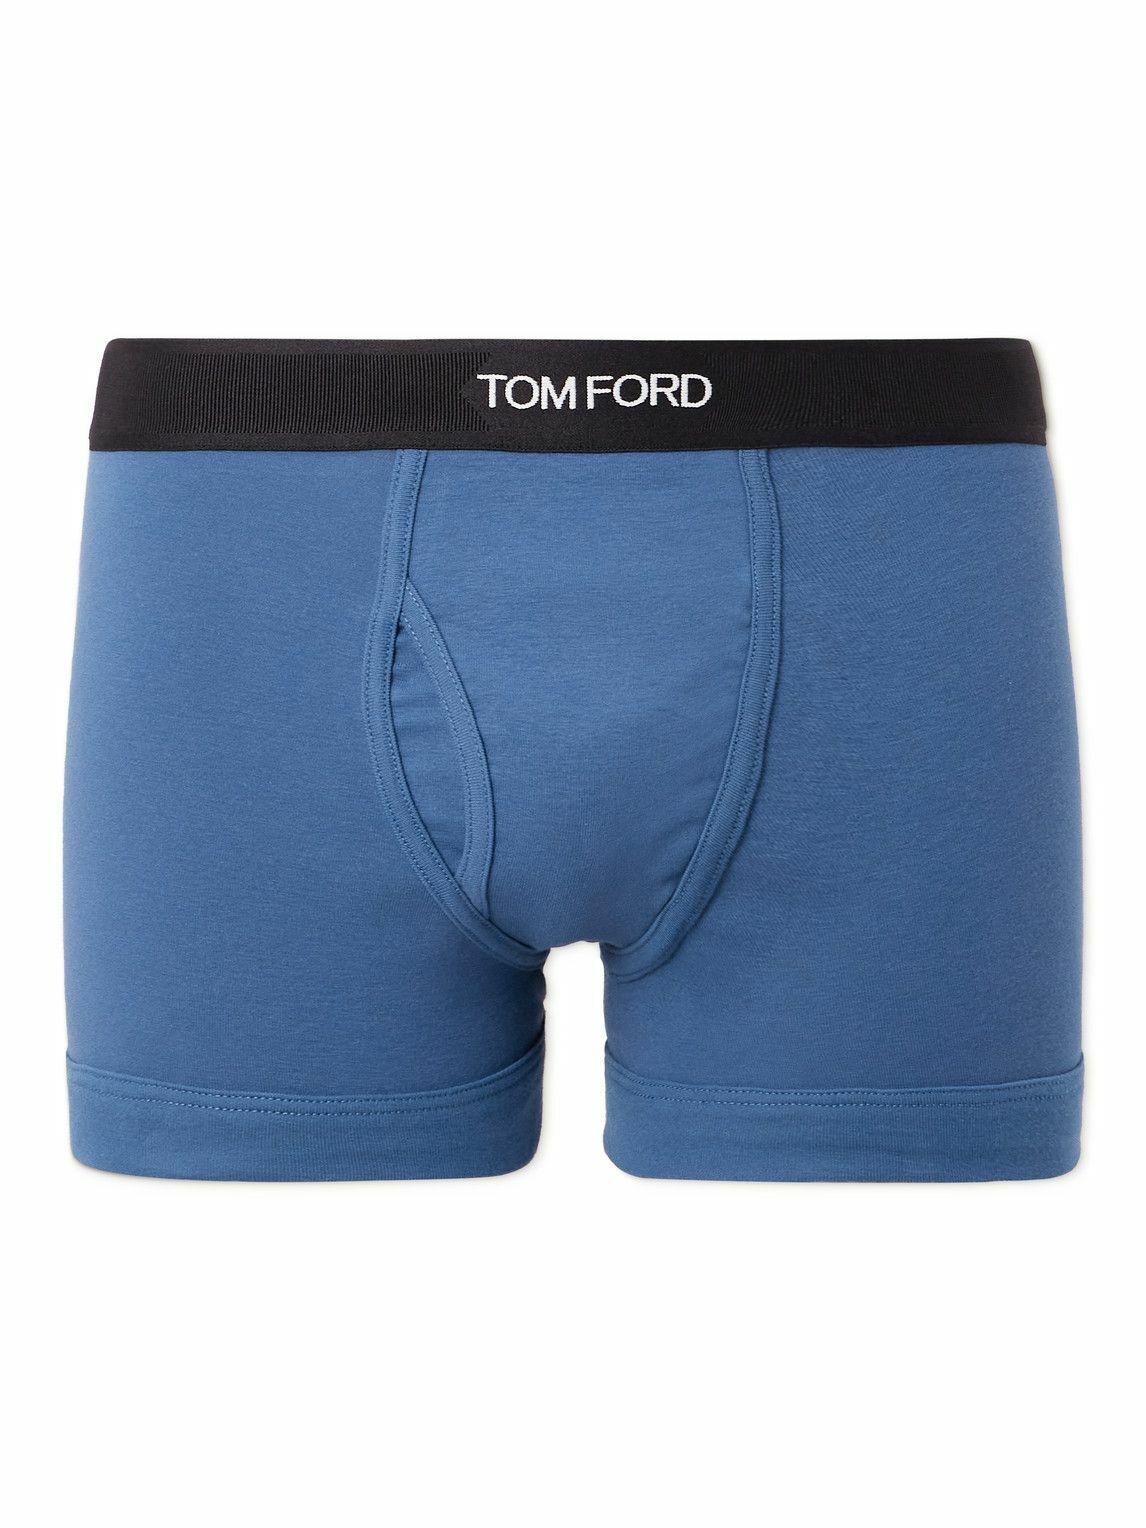 TOM FORD - Stretch-Cotton Boxer Briefs - Blue TOM FORD